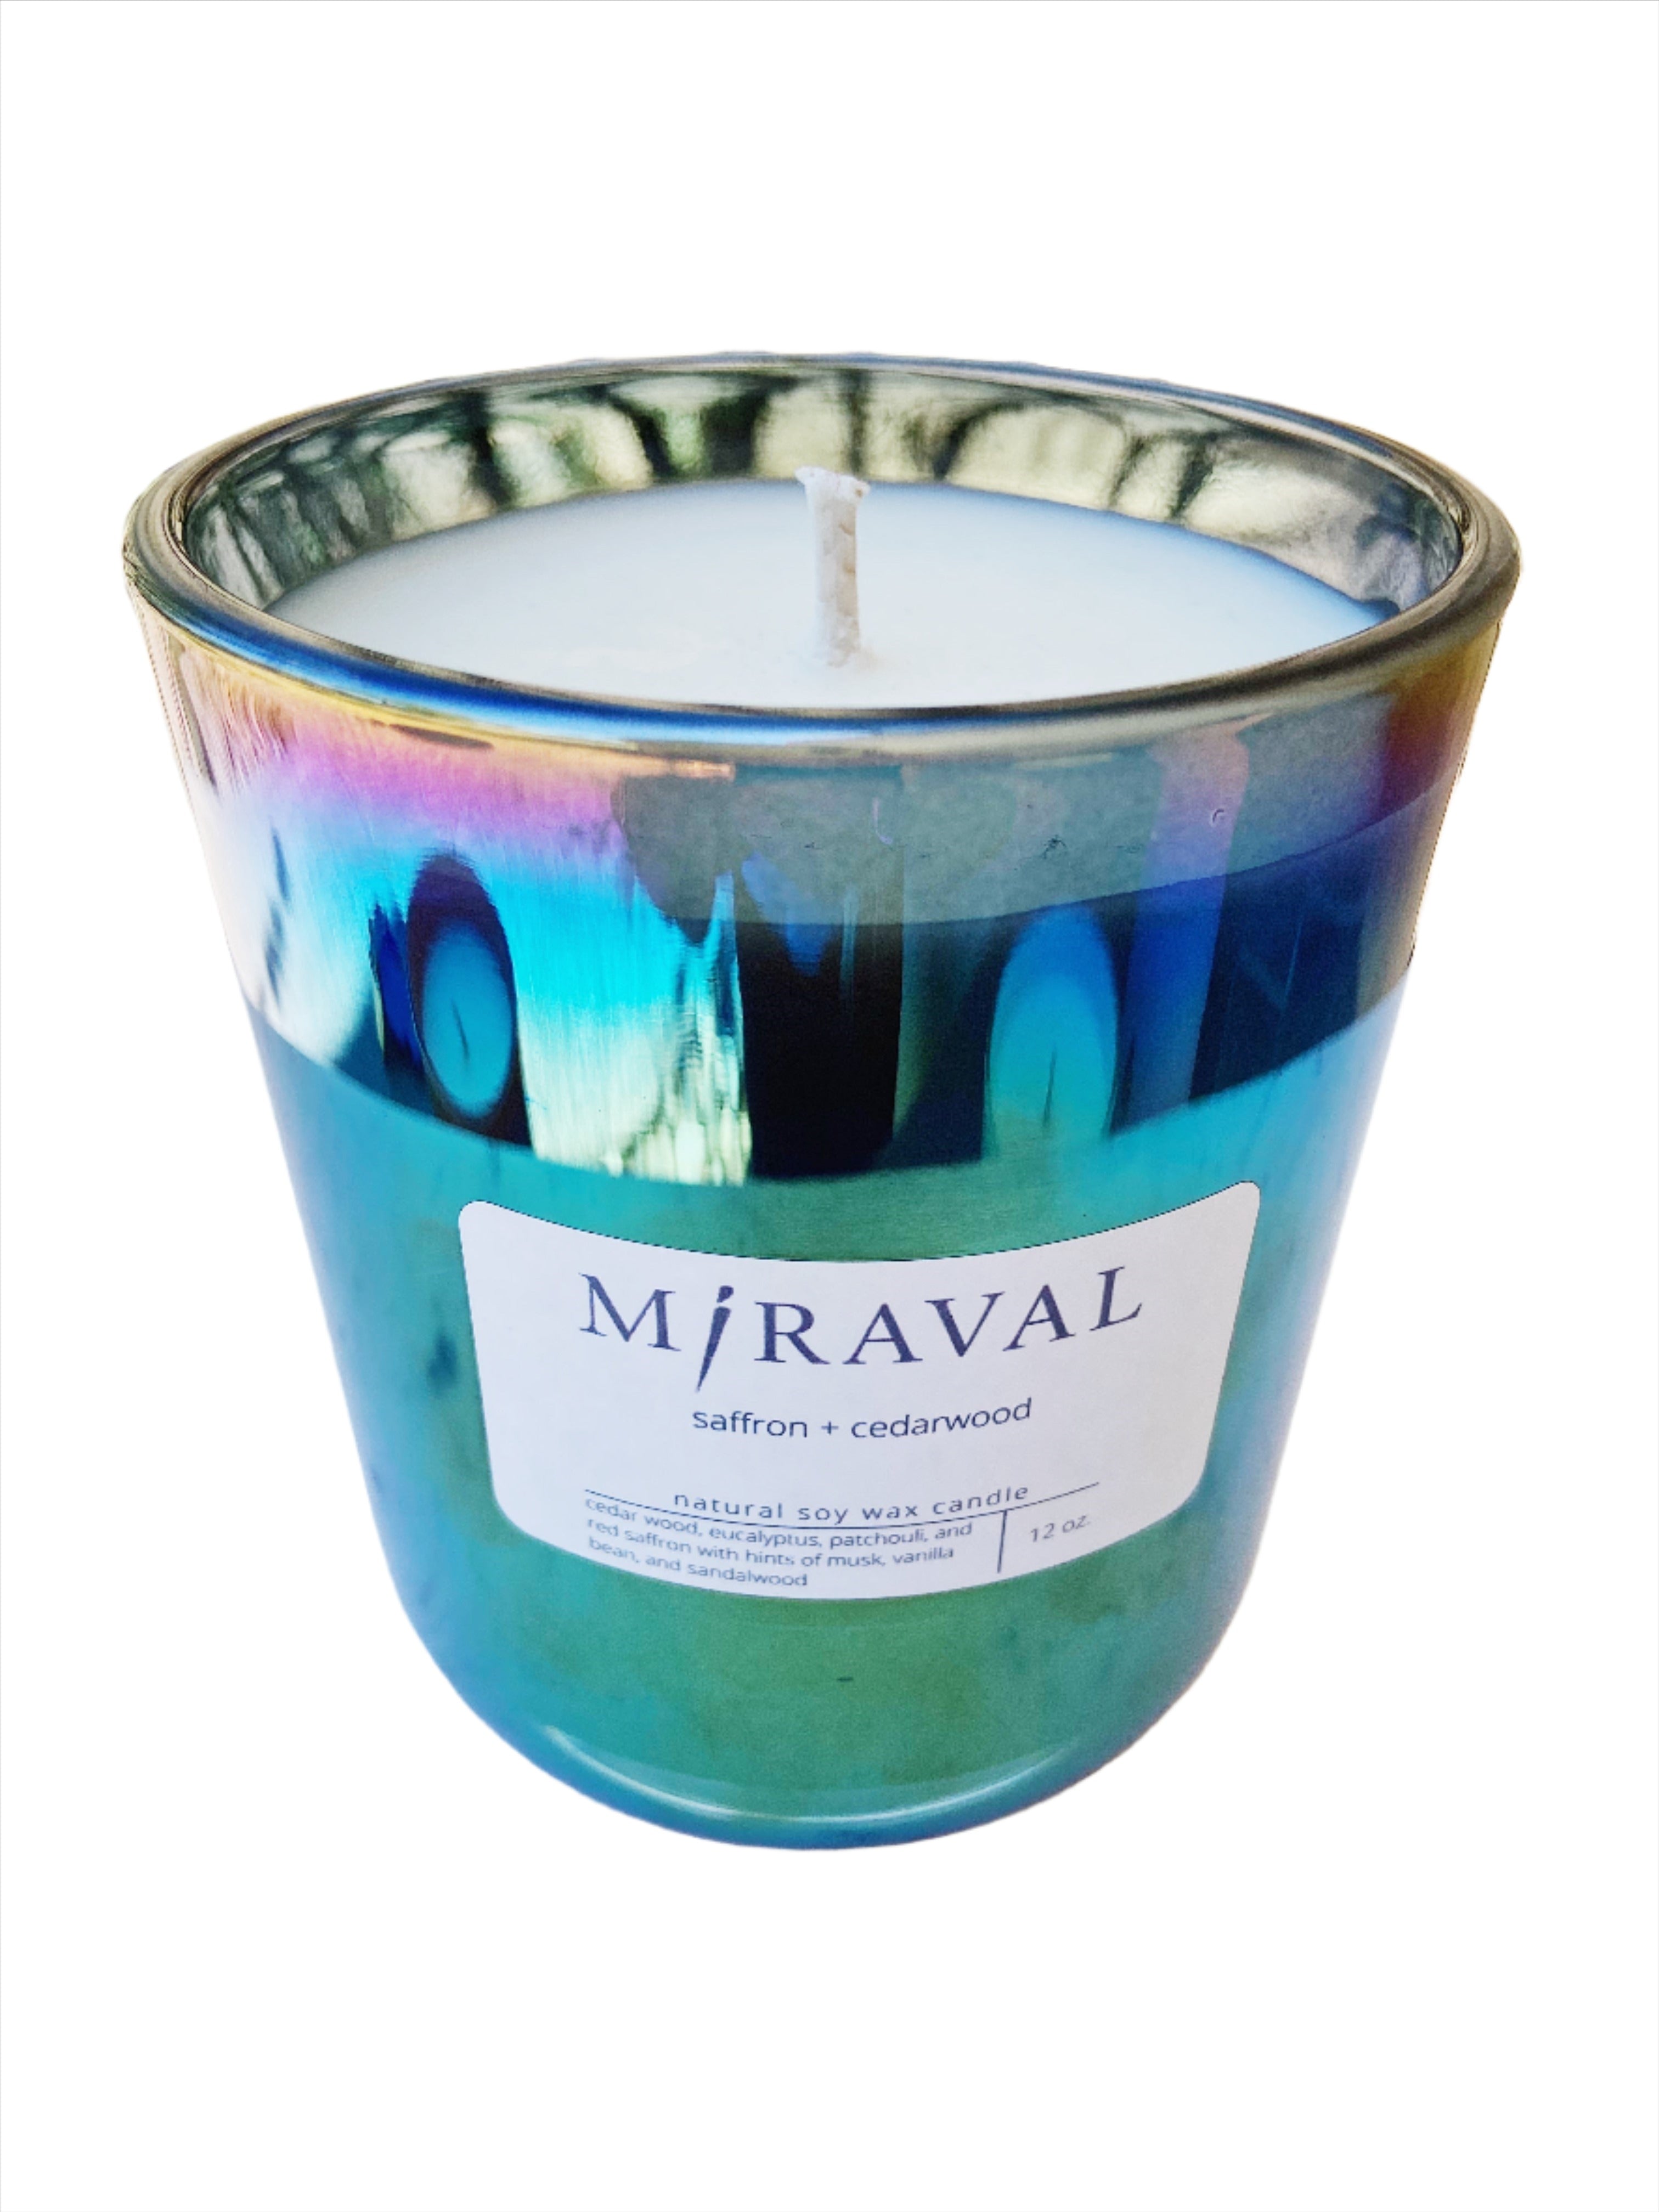 Miraval Candle - Saffron + Cedarwood